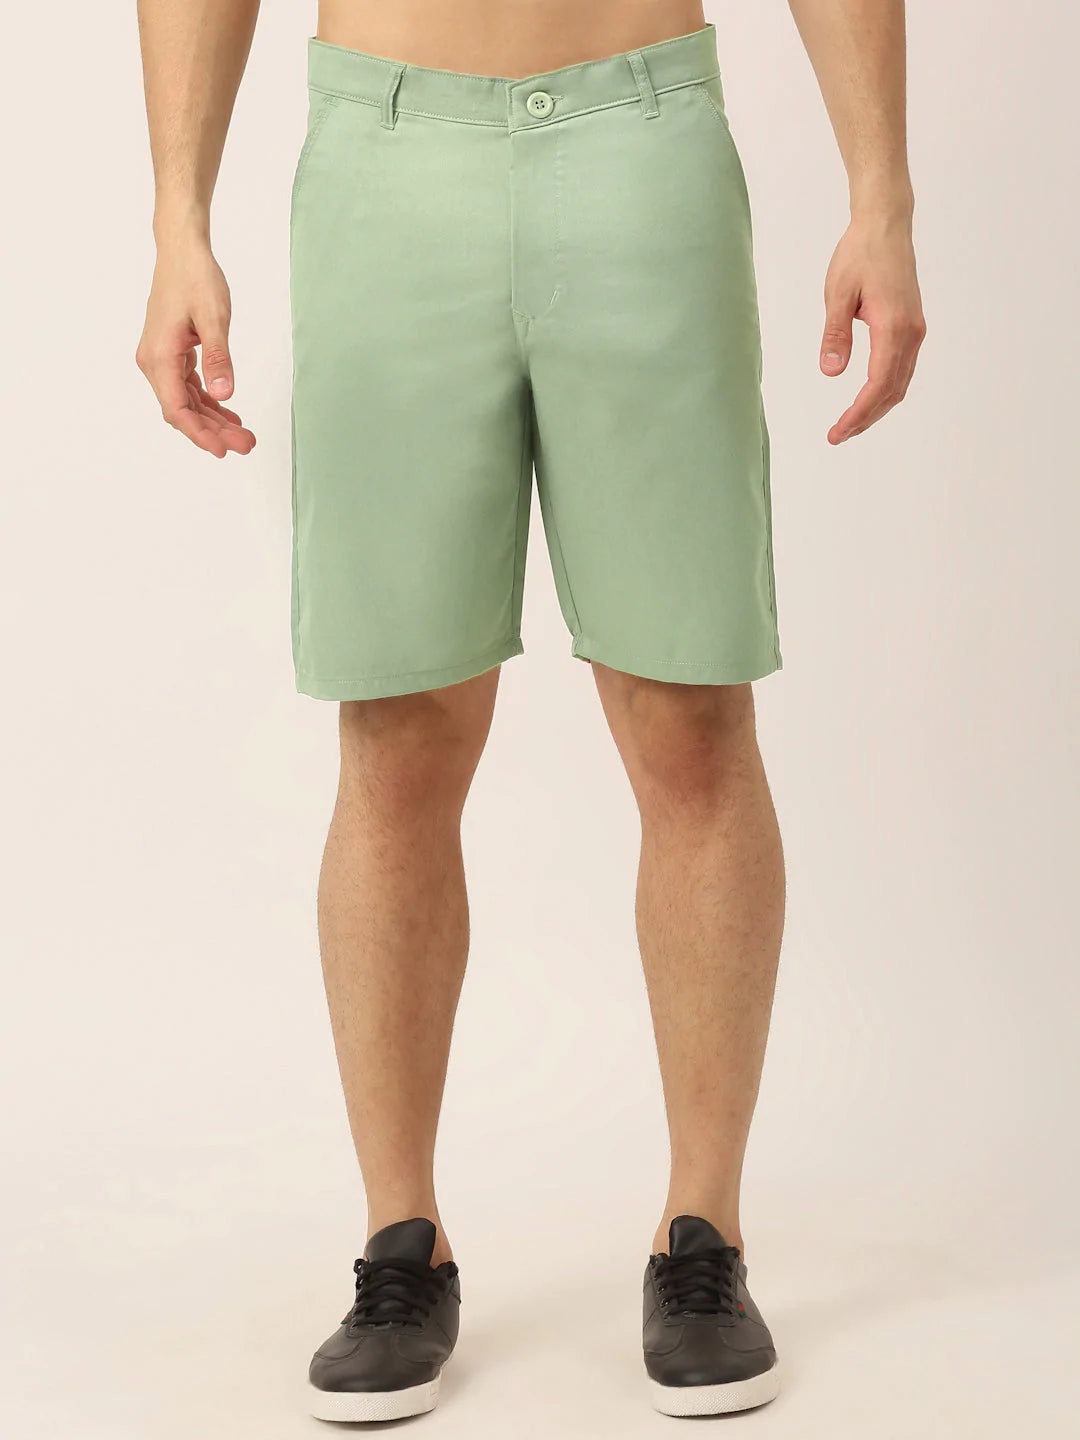 Jainish Men's Casual Cotton Solid Shorts ( SGP 153 Pista-Green )